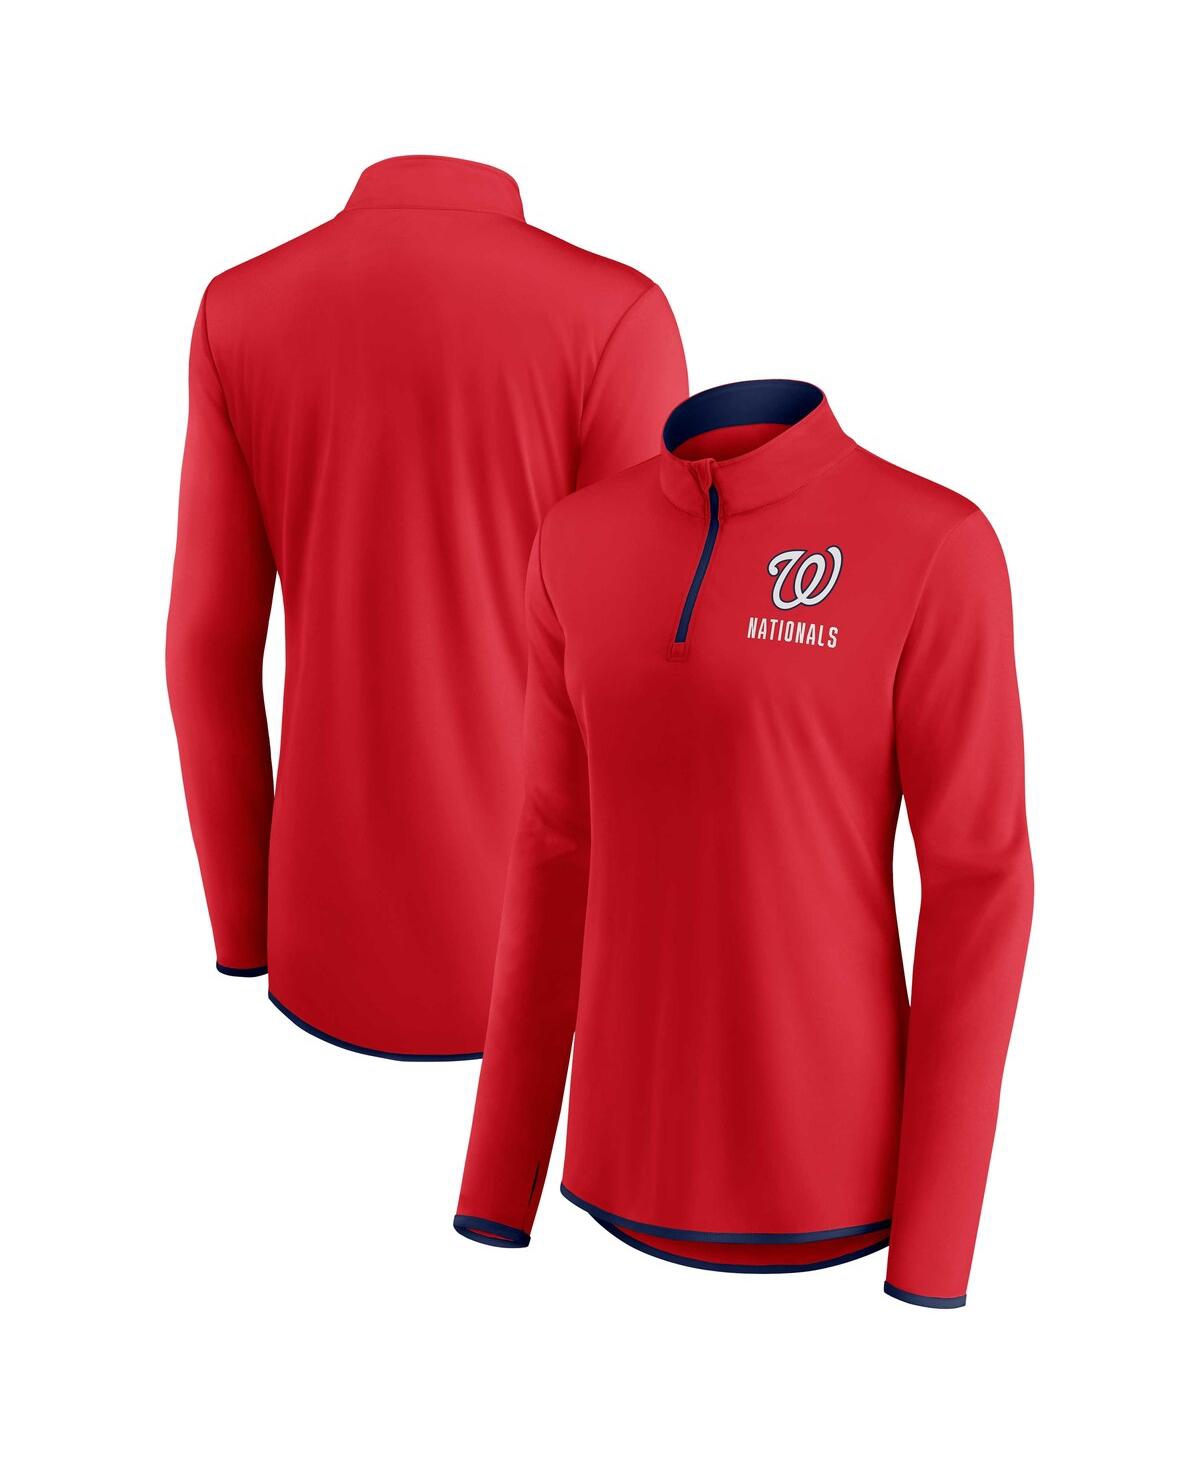 Women's Fanatics Red Washington Nationals Worth The Drive Quarter-Zip Jacket - Red